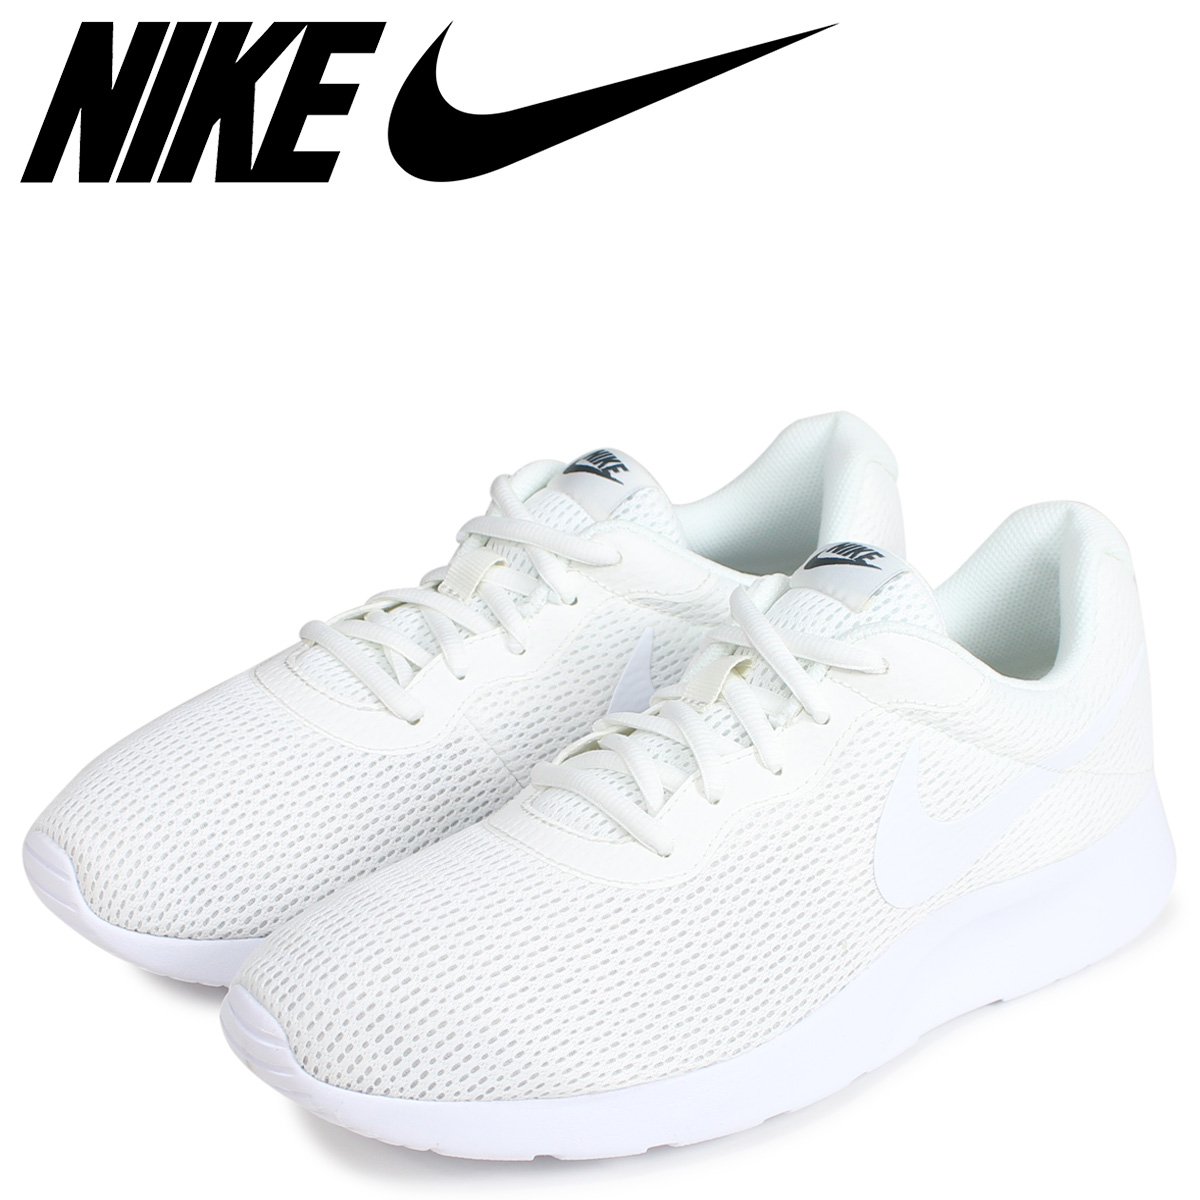 Nike ナイキ タンジュン スニーカー メンズ Tanjun ホワイト 白 103 シュガーオンラインショップ